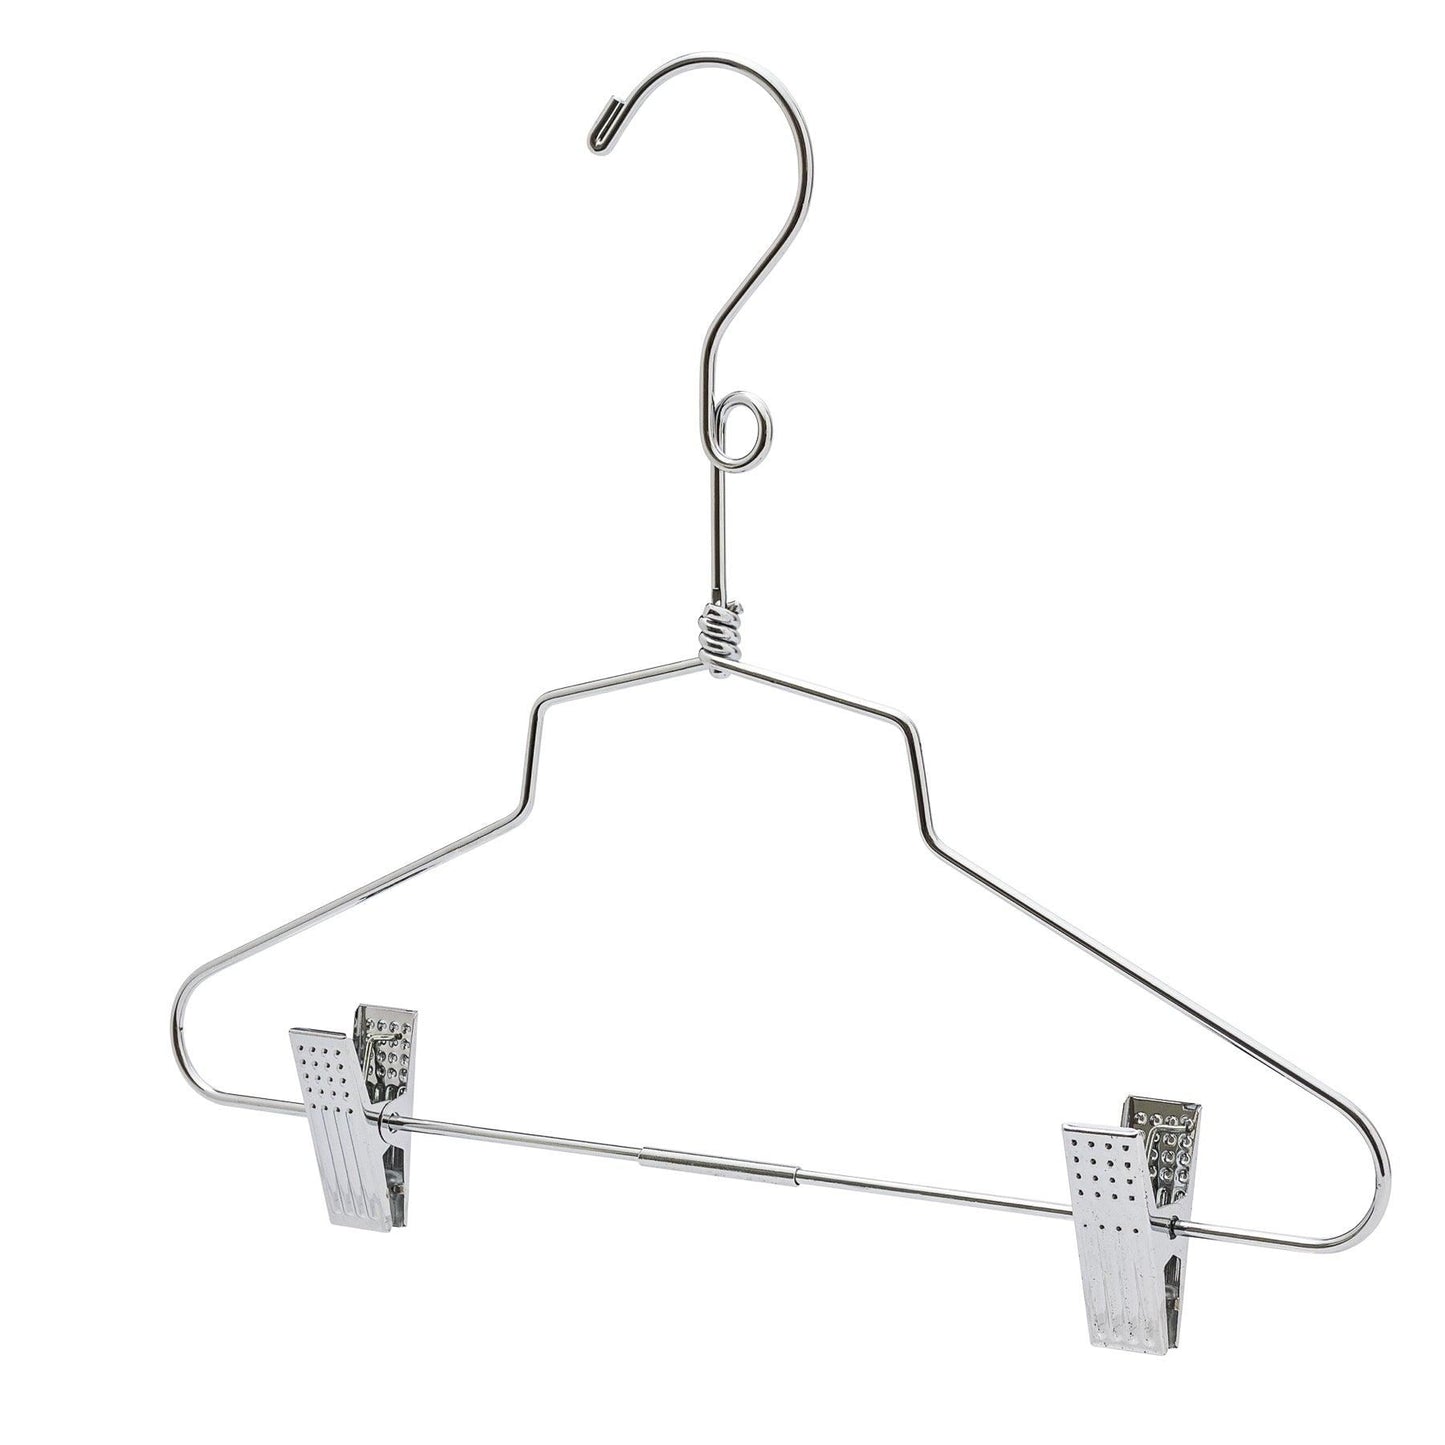 Kid Combination Metal Clothes Hanger w/ Clips - 30cm X 3.5mm Thick - Sold in Bundles of 25/50/100 - Hangersforless